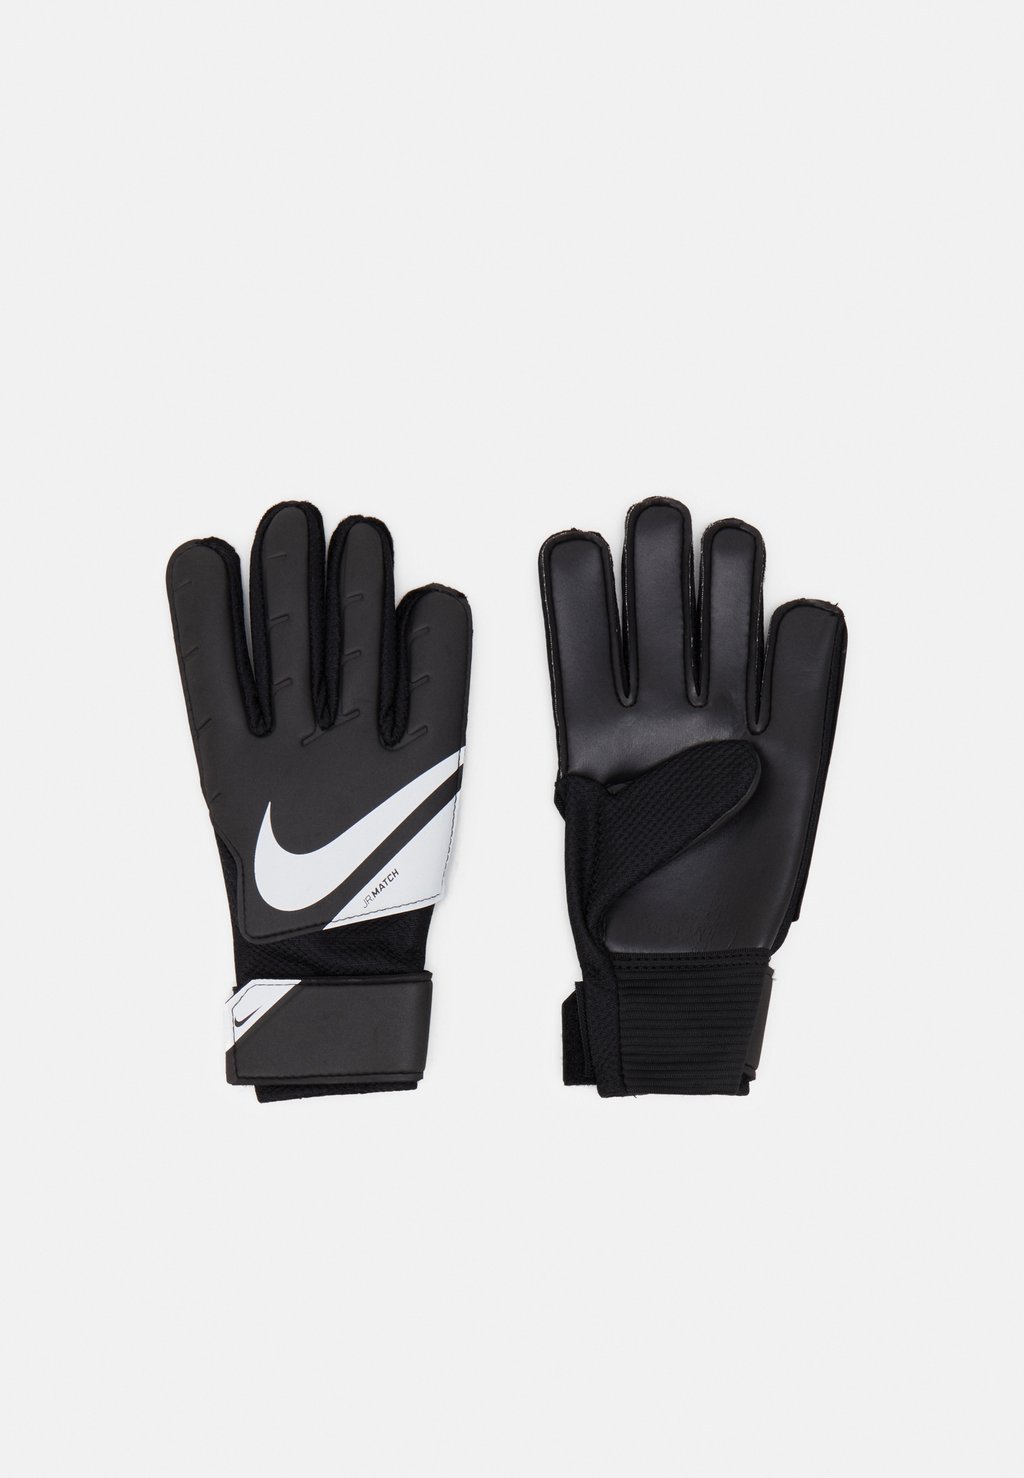 Перчатки вратарские Goalkeeper Match Unisex Nike, цвет black/white перчатки вратарские nike goalkeeper match синий размер 7